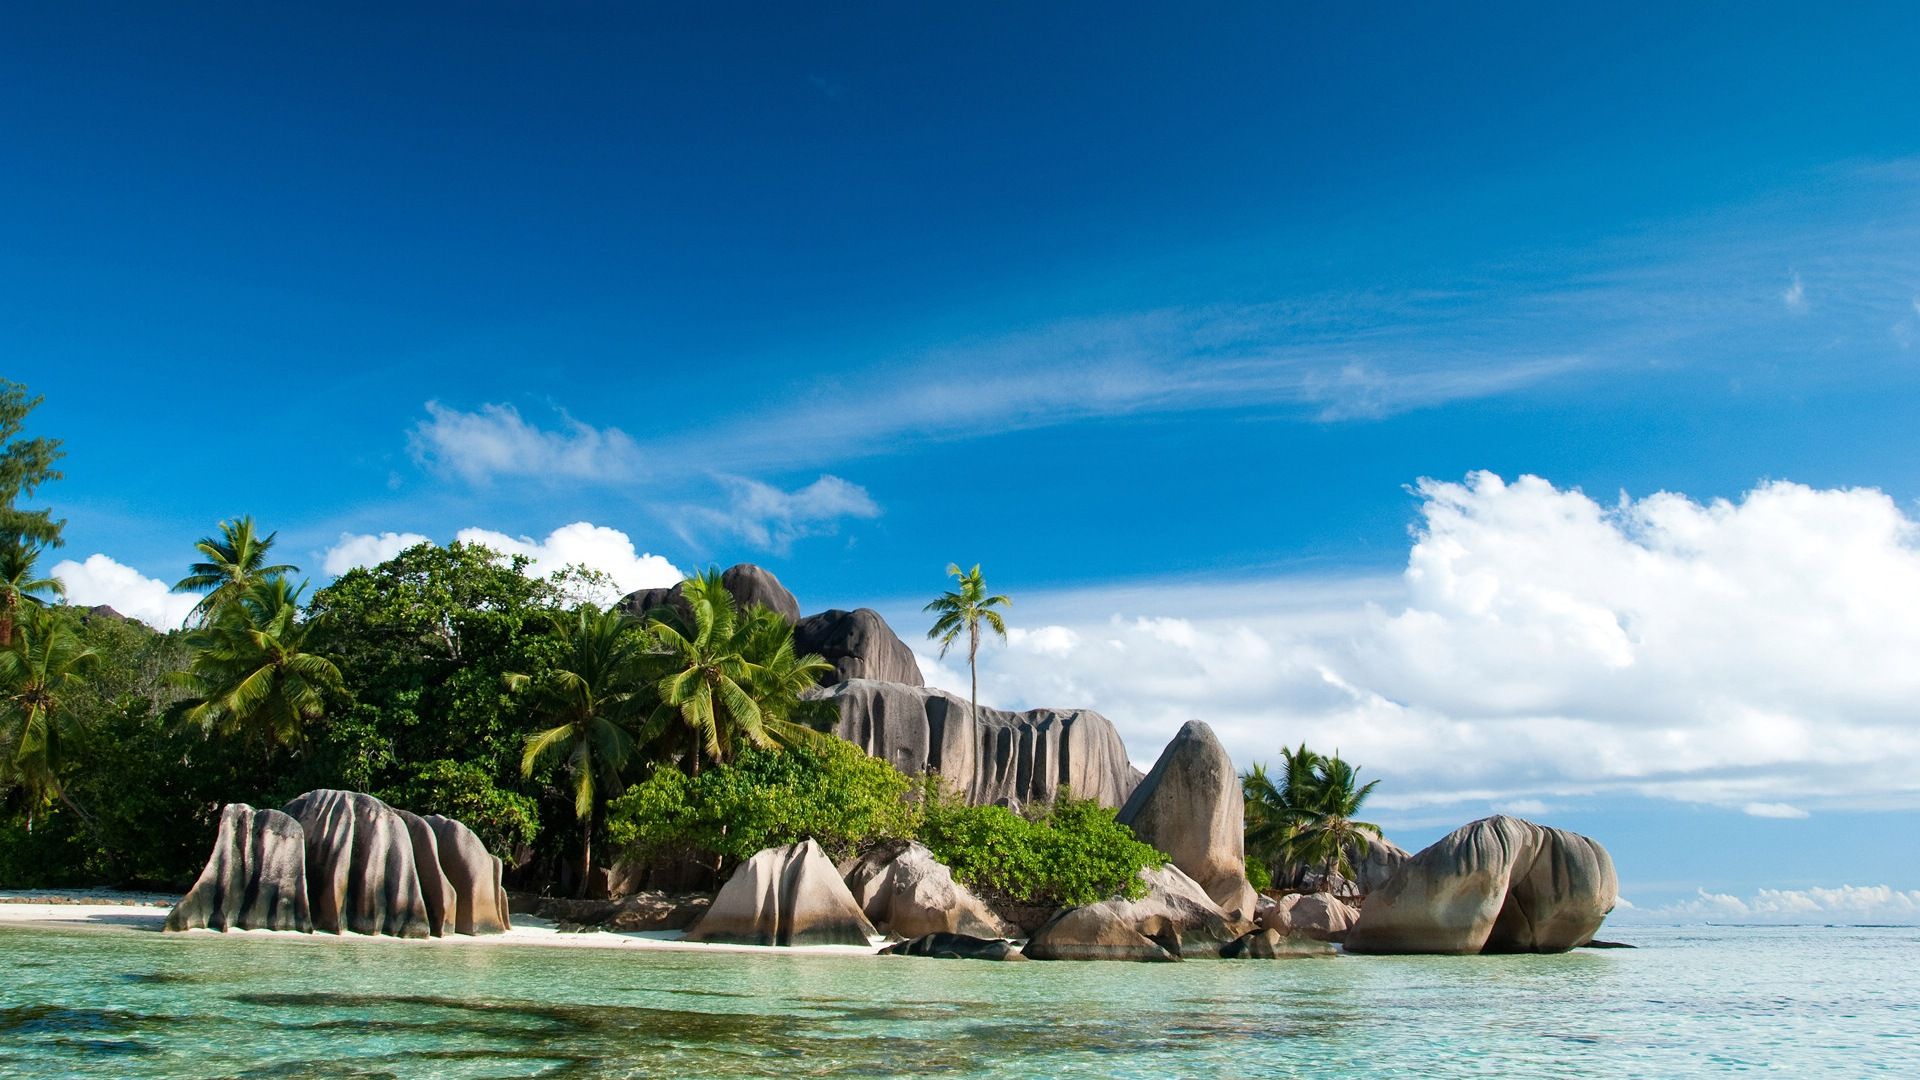 Seychelles Islands Windows 8 Theme | All For Windows 10 Free